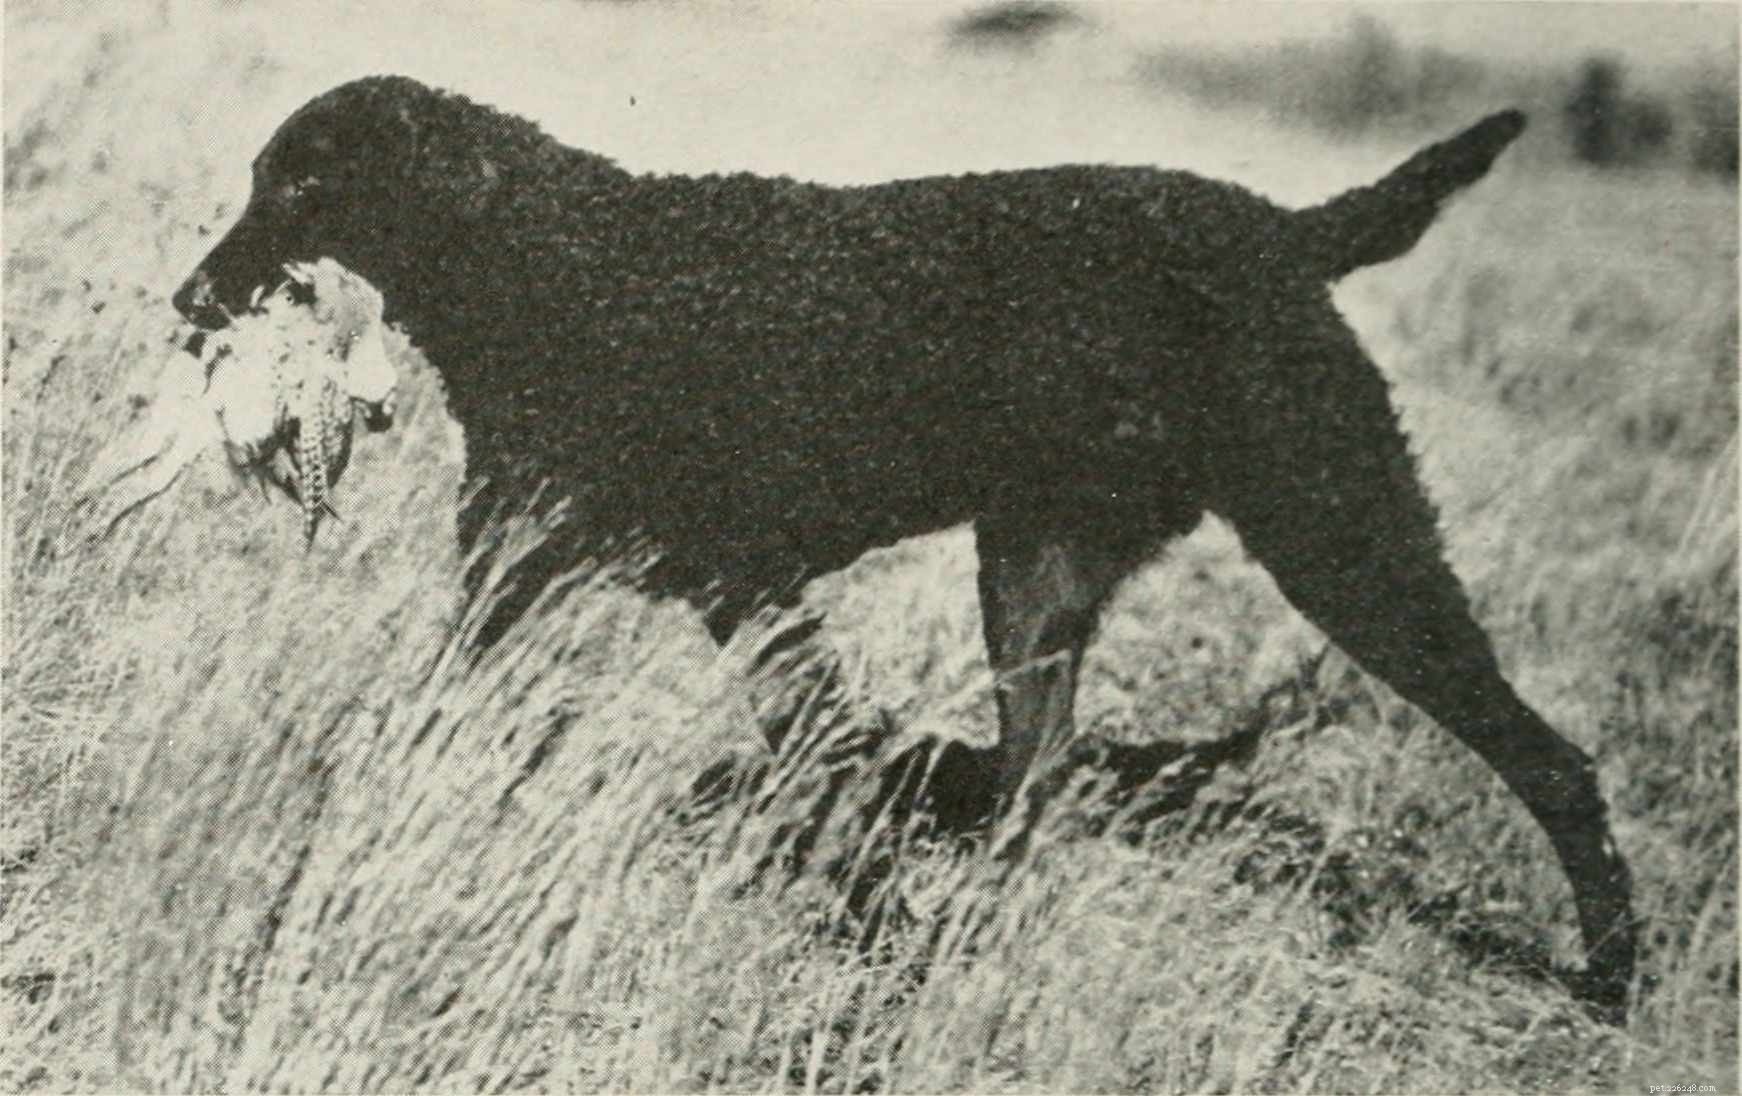 Curly-Coated Retriever:Profil plemene psů